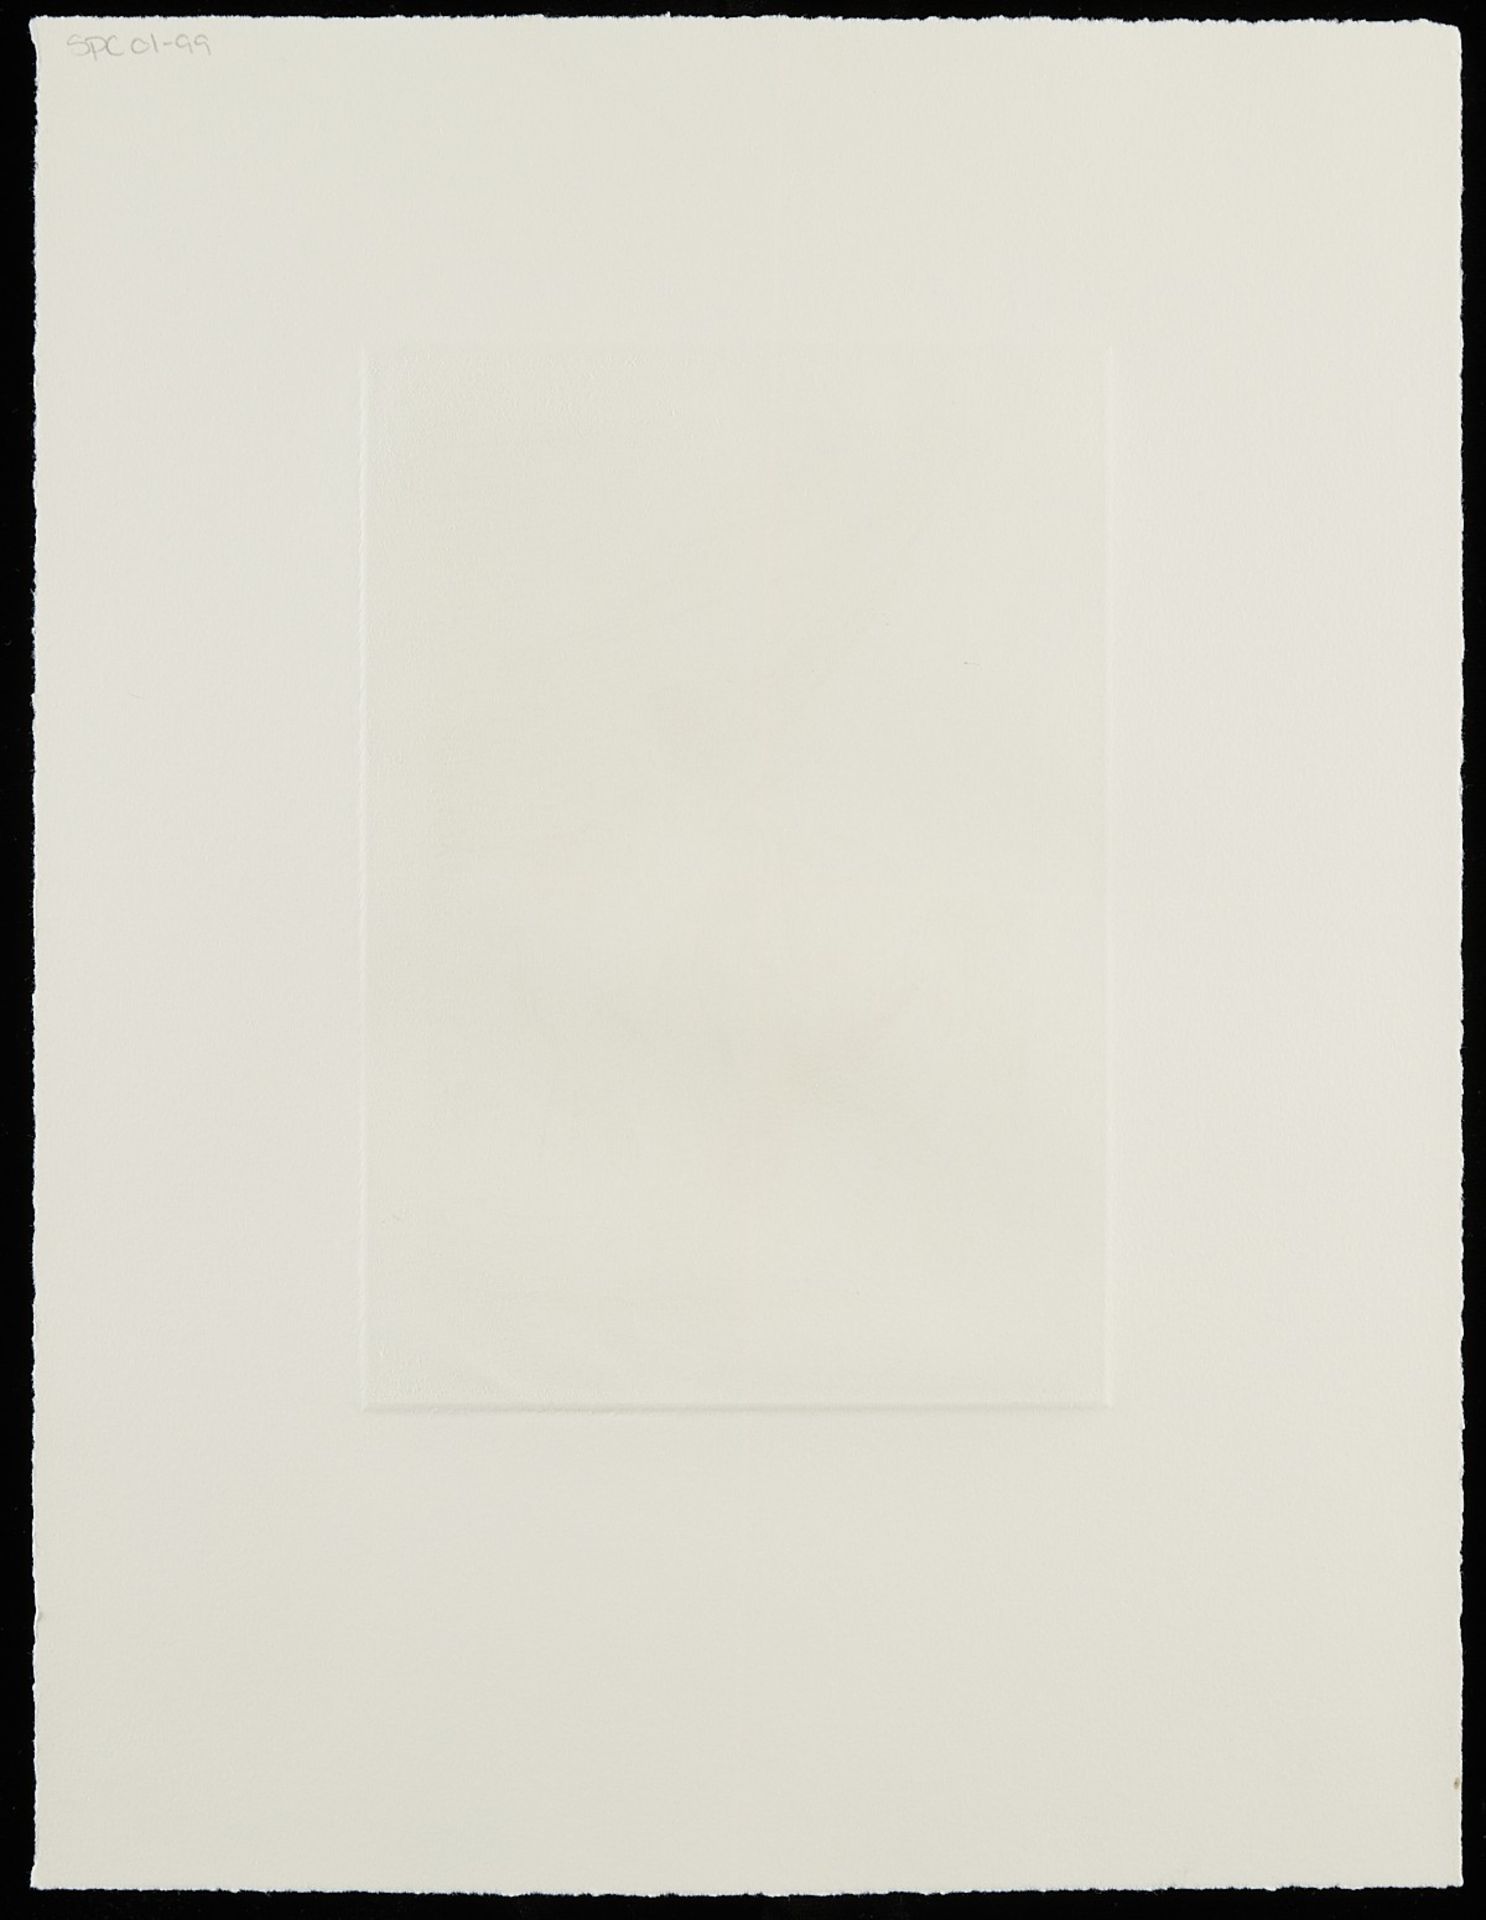 Grp: 8 Chagoya "Return To Goya's Caprichos" Suite - Image 24 of 40